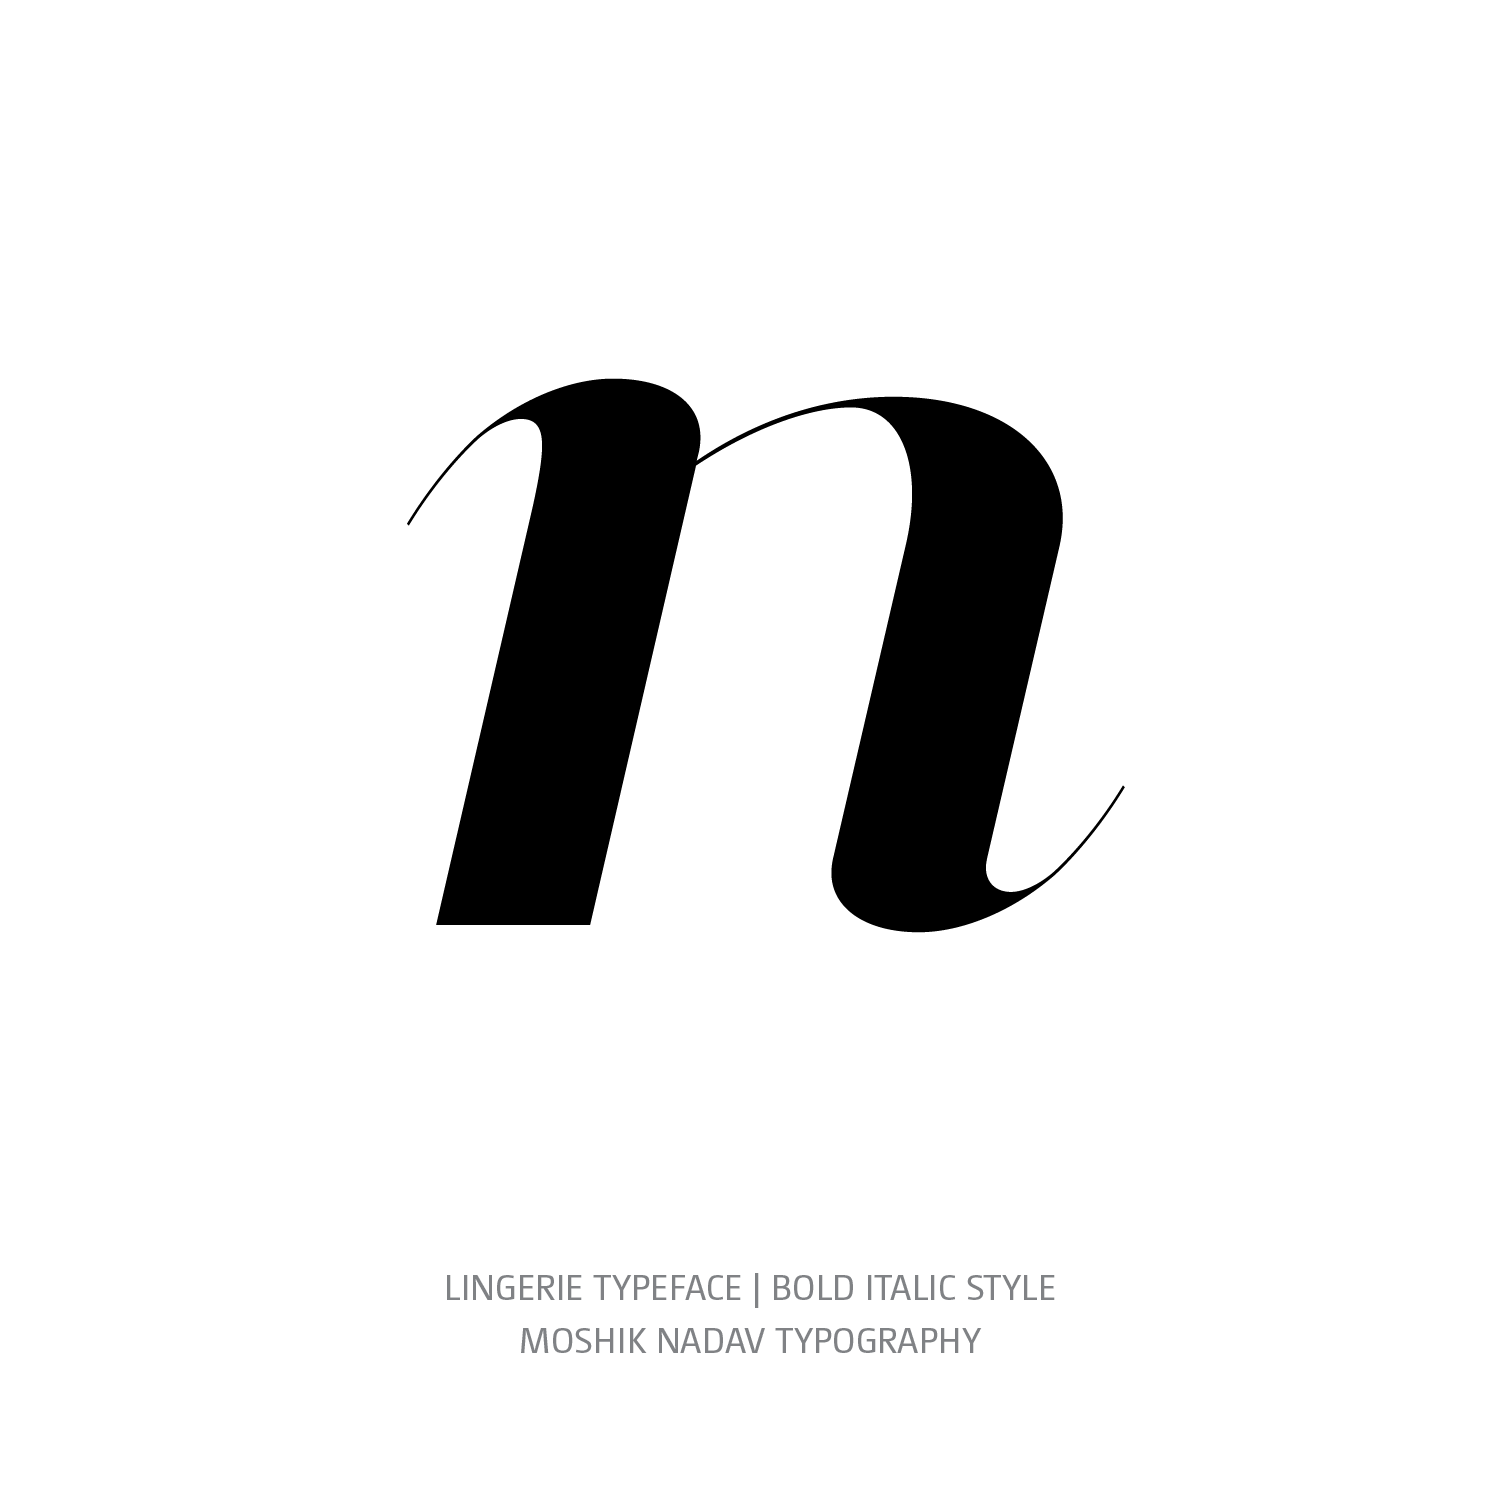 Lingerie Typeface Bold Italic n